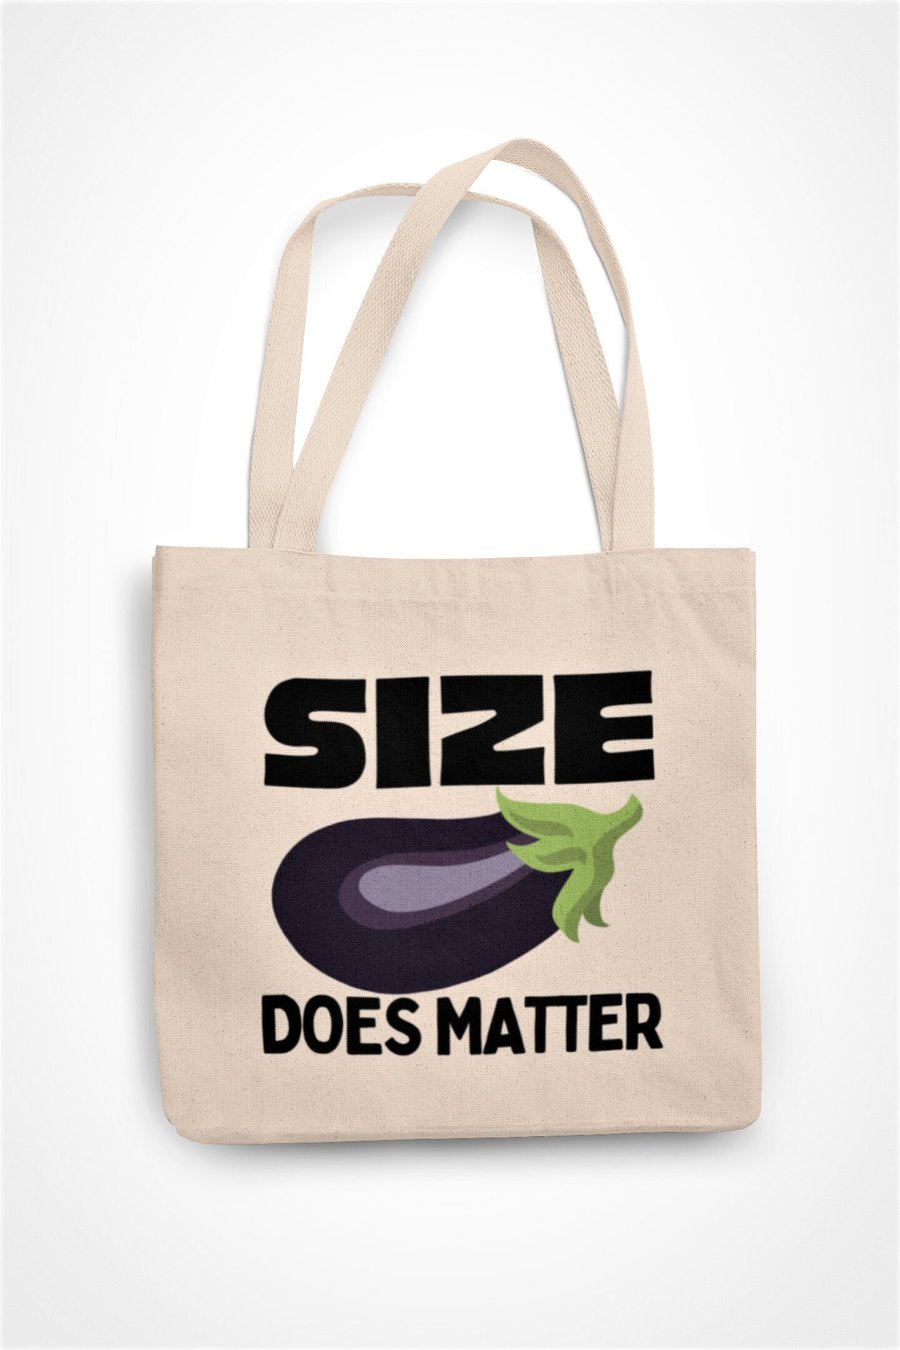 Size Does Matter Tote Bag Rude Eggplant Emoji Eco Shopping Bag Big willy joke